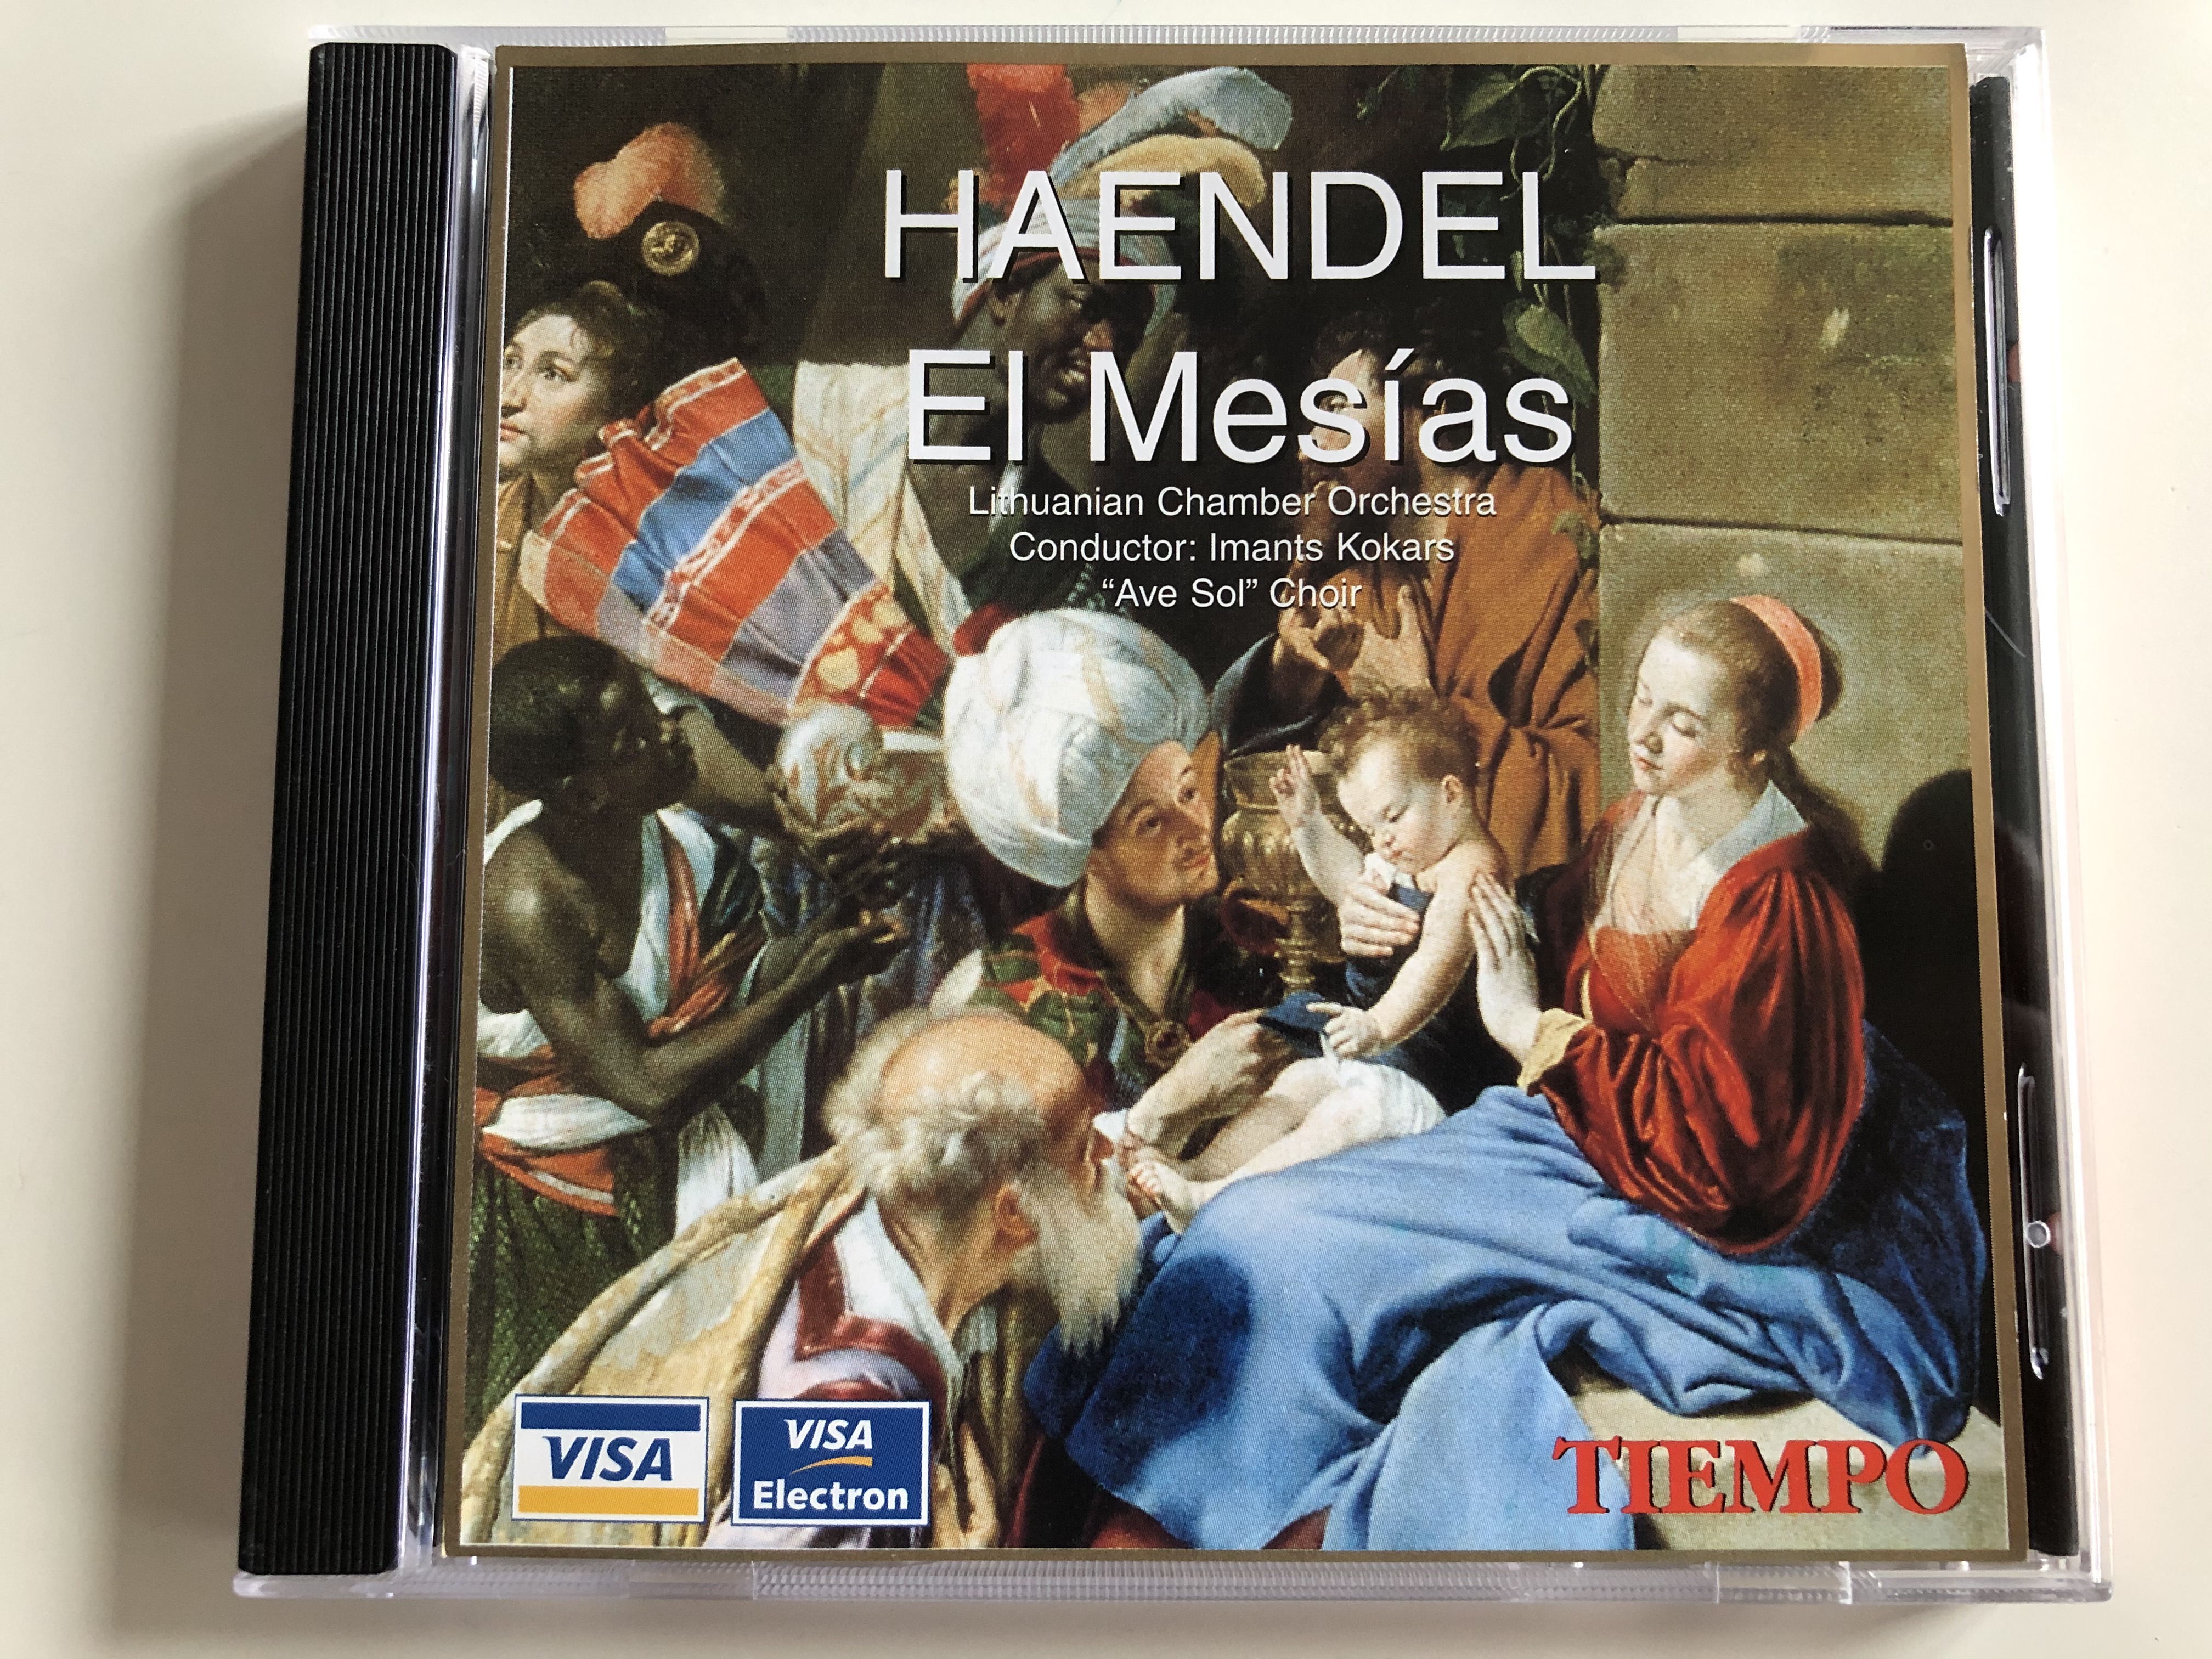 haendel-el-mes-as-lithuanian-chamber-orchestra-conductor-imants-kokars-ave-sol-choir-star-records-audio-cd-1998-na-2442-1-.jpg